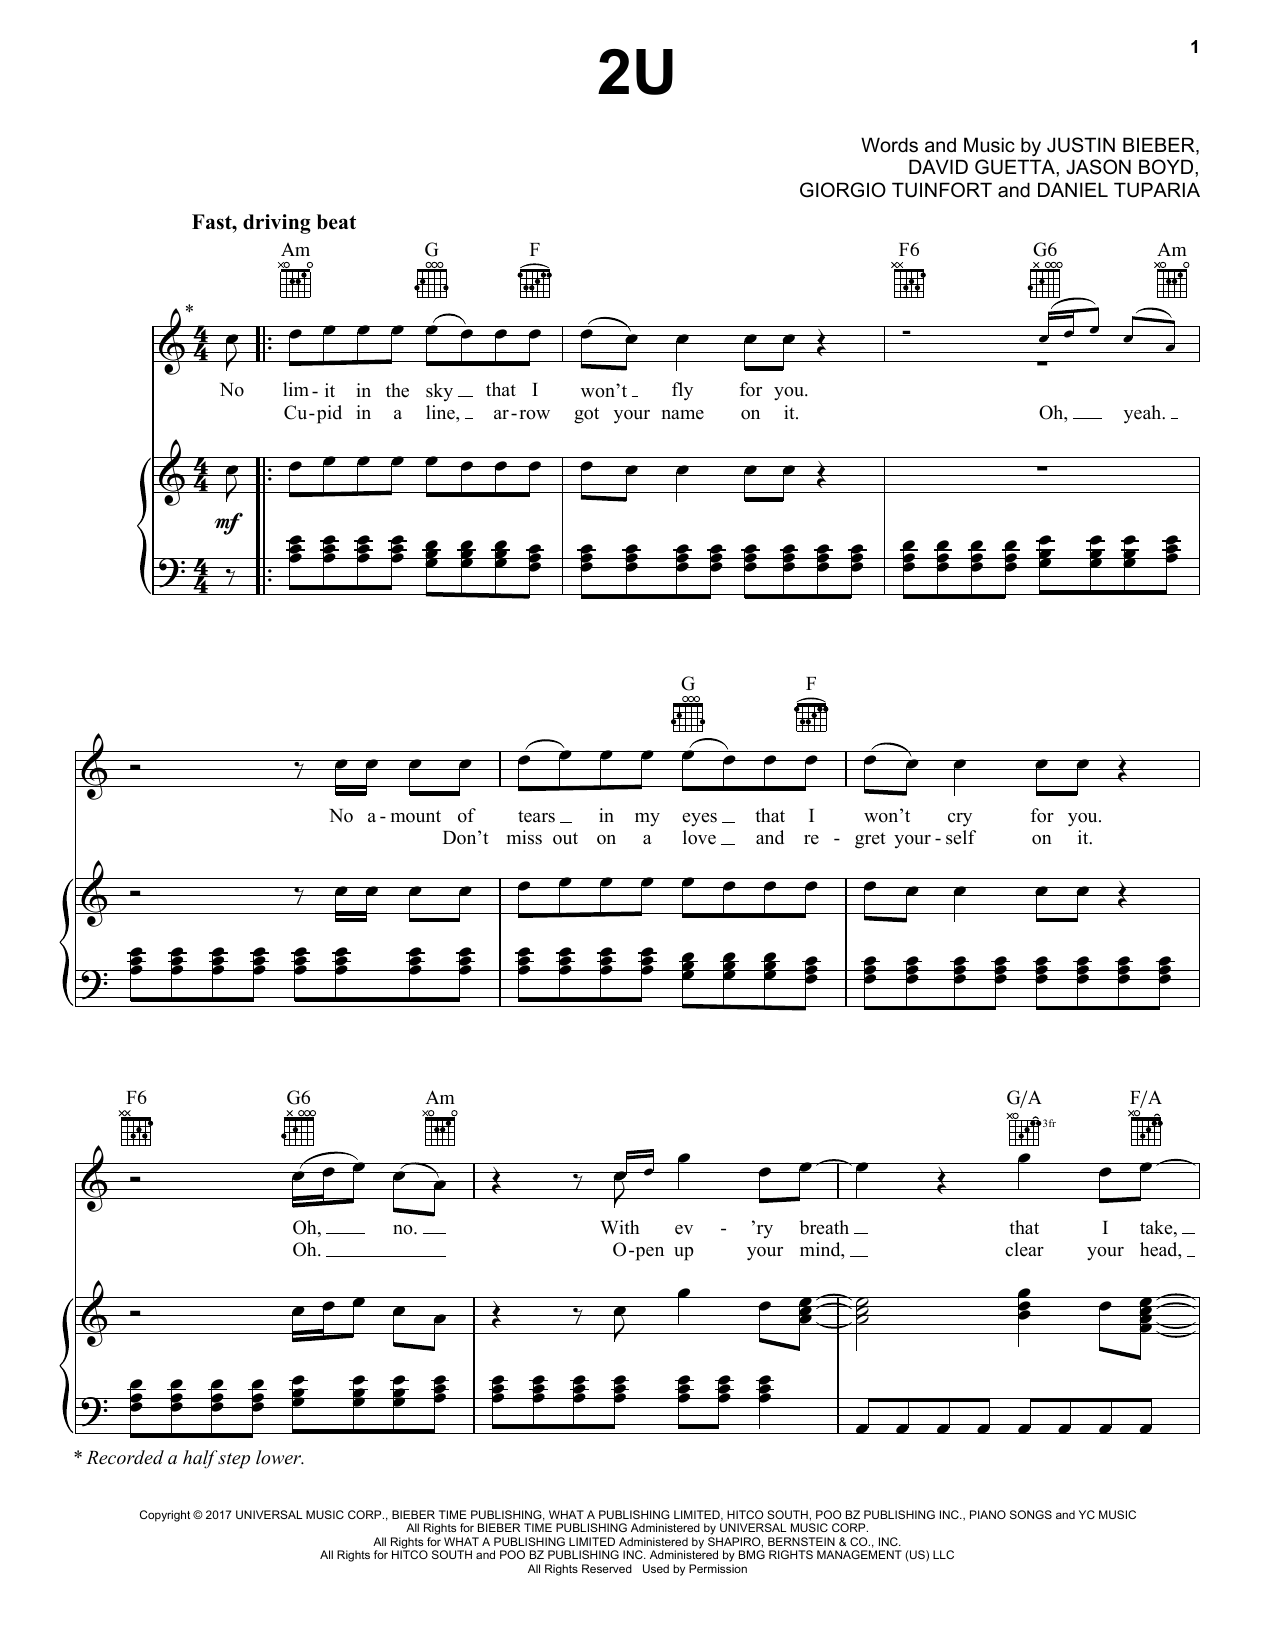 Justin Bieber & David Guetta 2U Sheet Music Notes & Chords for Beginner Piano - Download or Print PDF